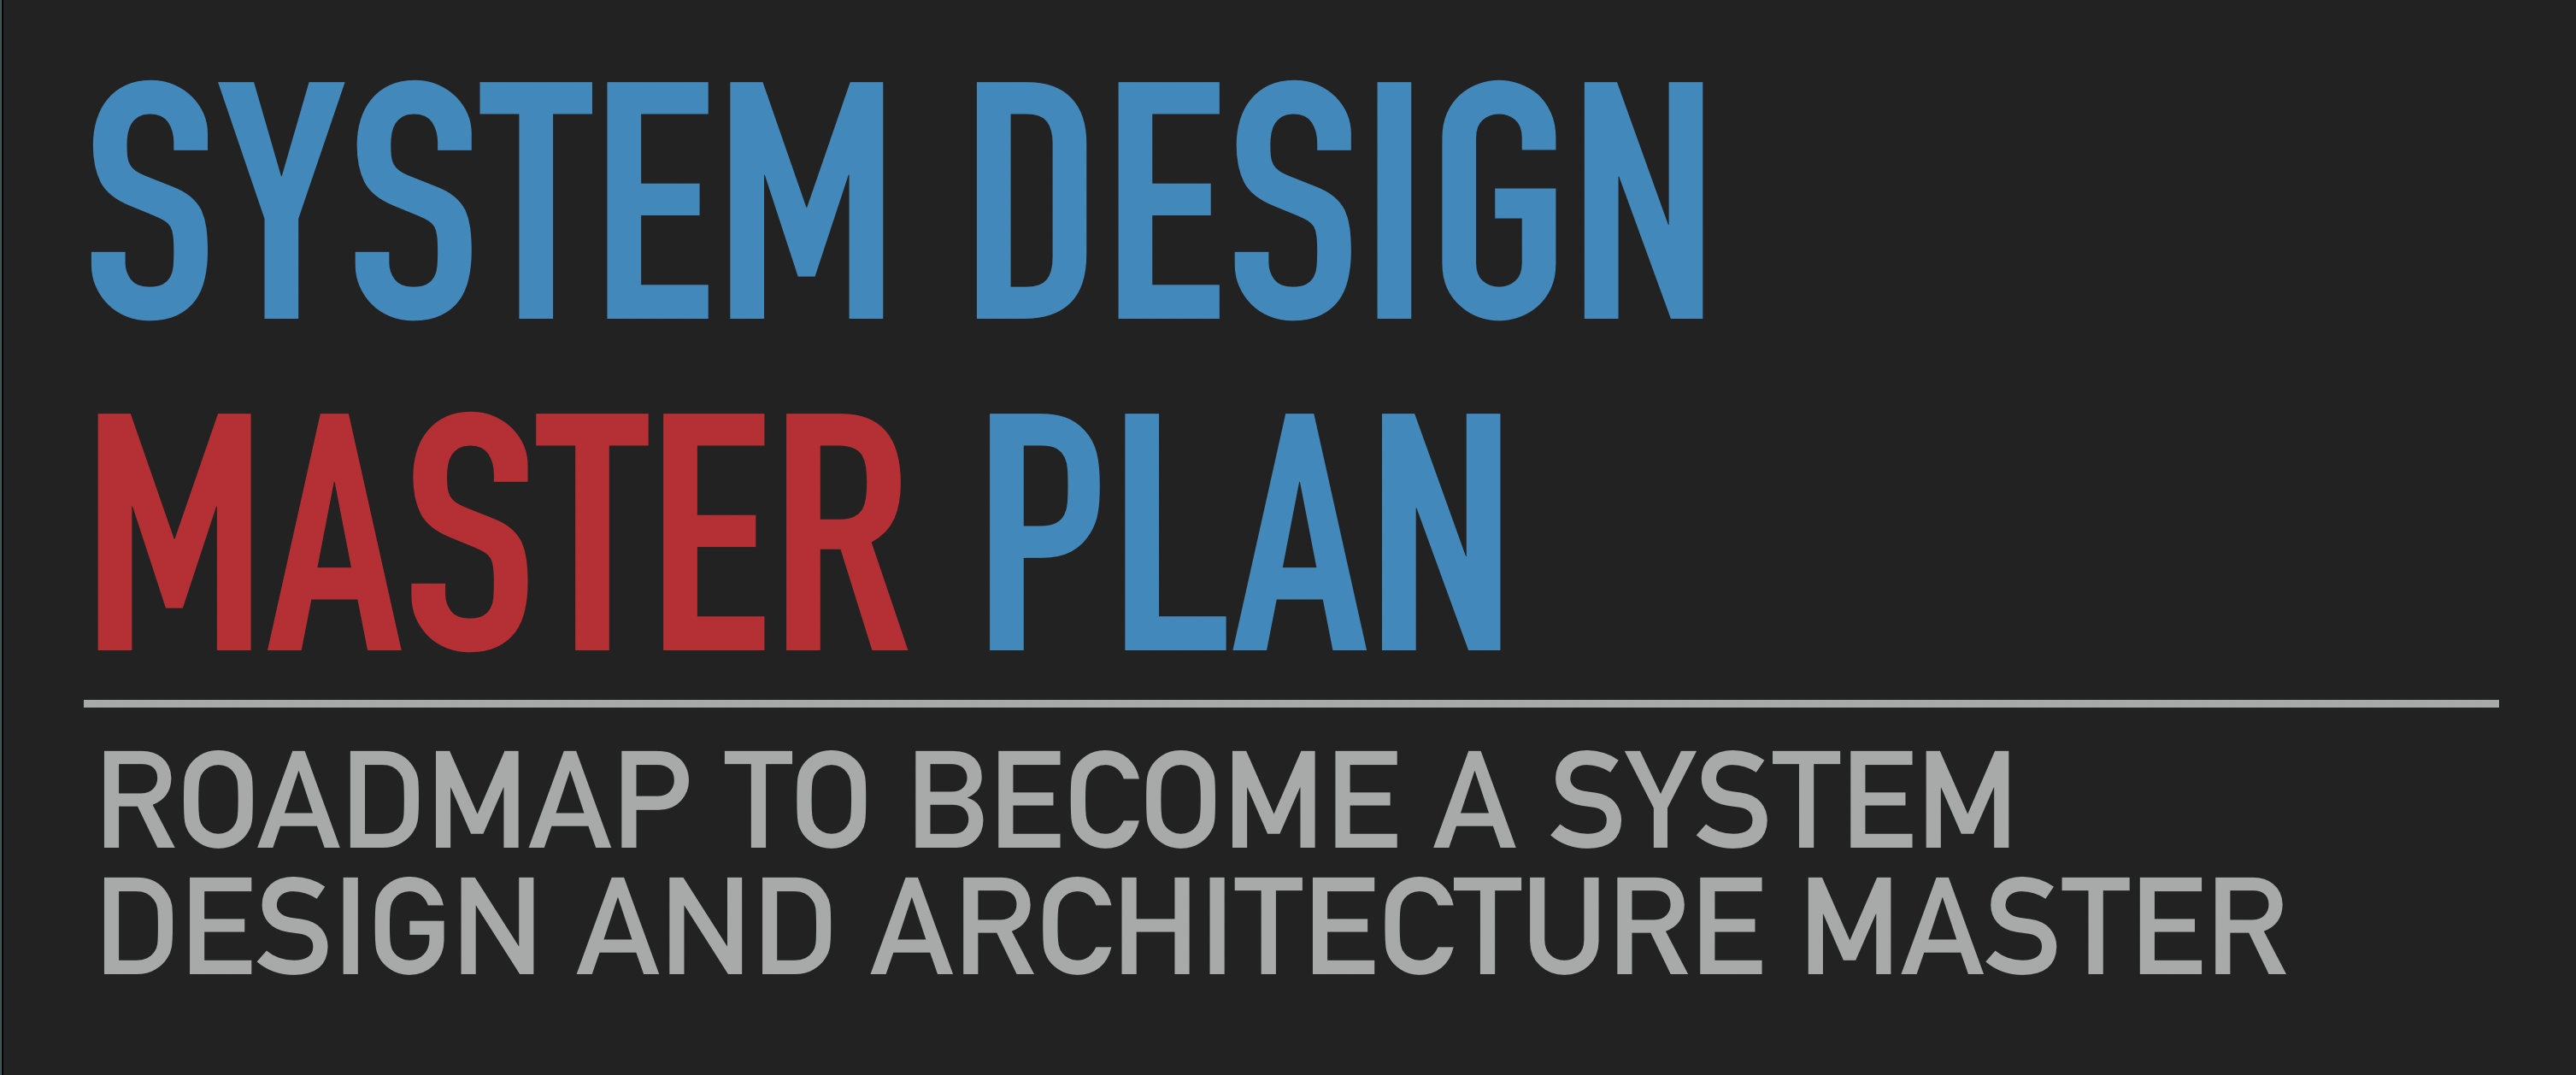 System Design Master Plan